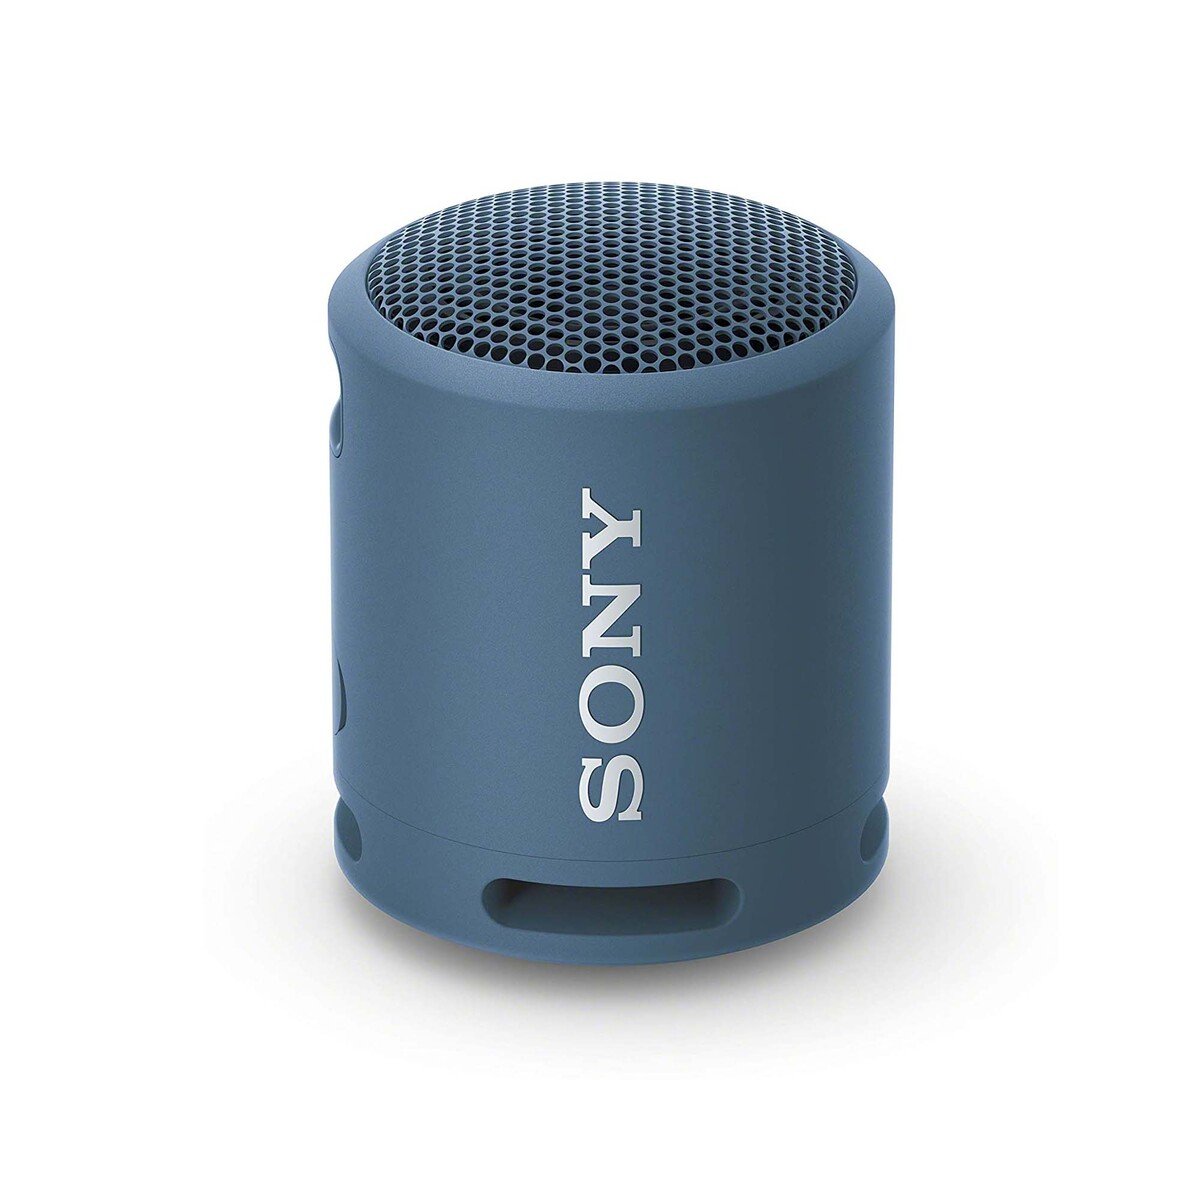 Sony SRS-XB13 Extra BASS Wireless Portable Speaker IP67 Waterproof Bluetooth, Blue